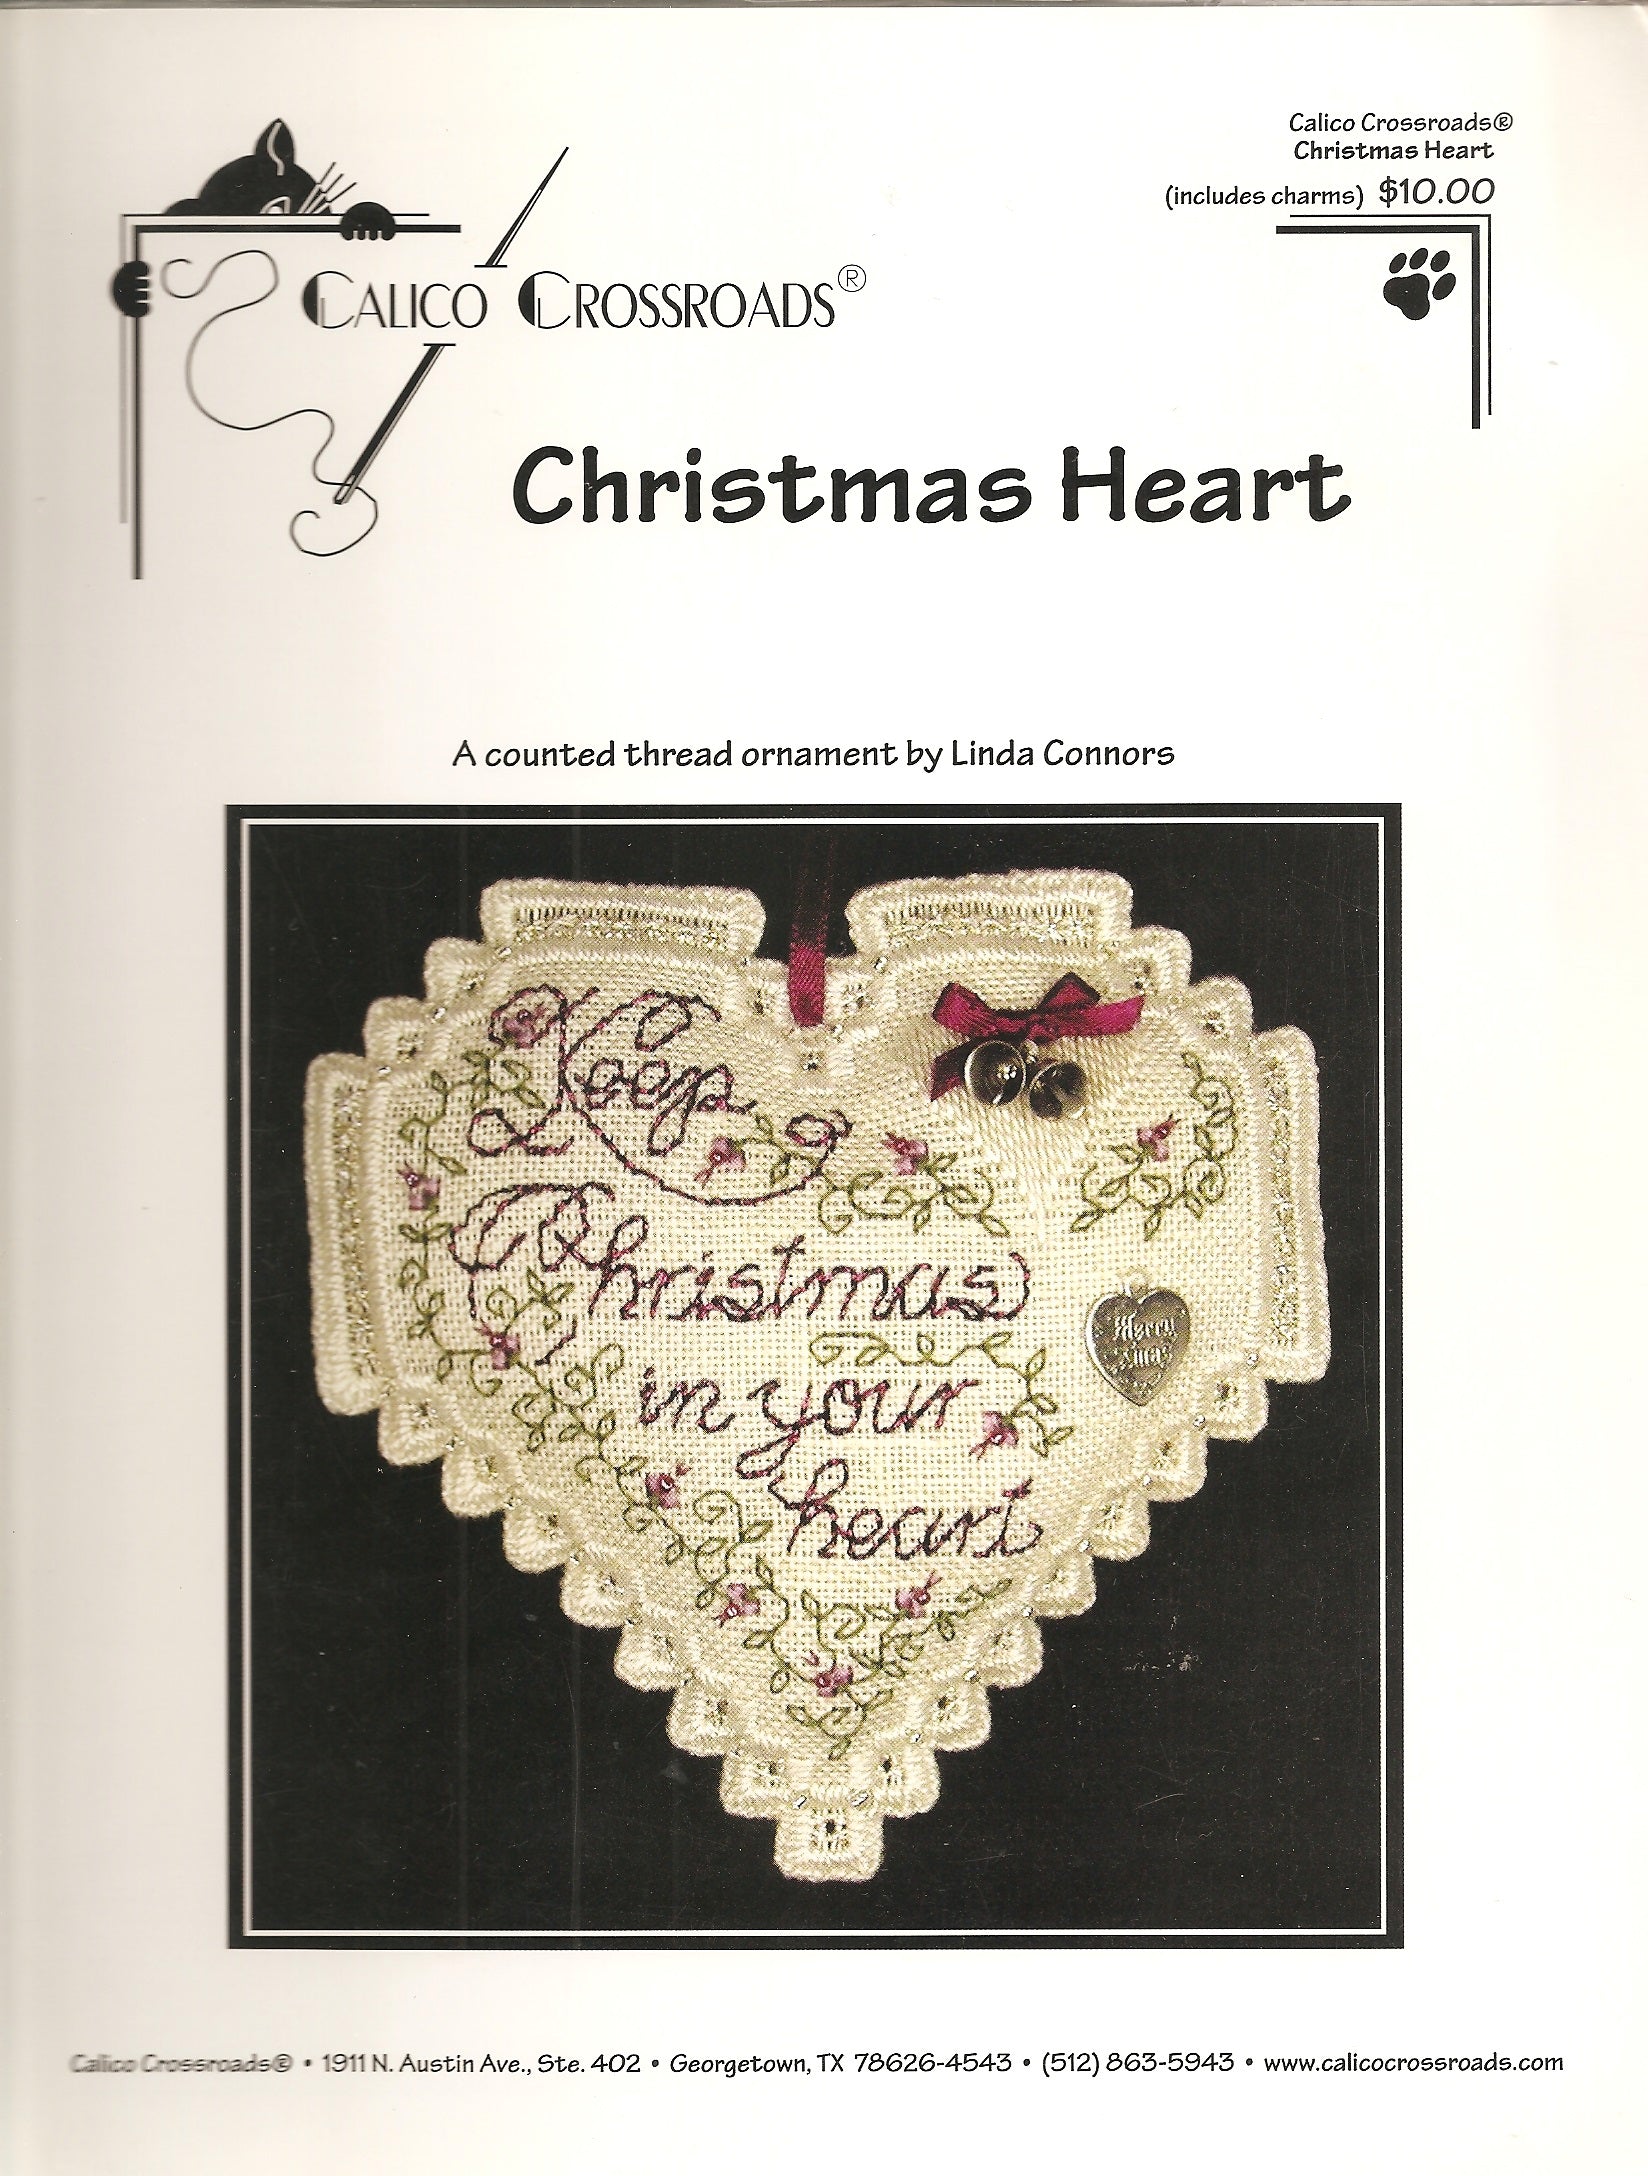 Calico Crossroads Christmas Heart ornament cross stitch pattern